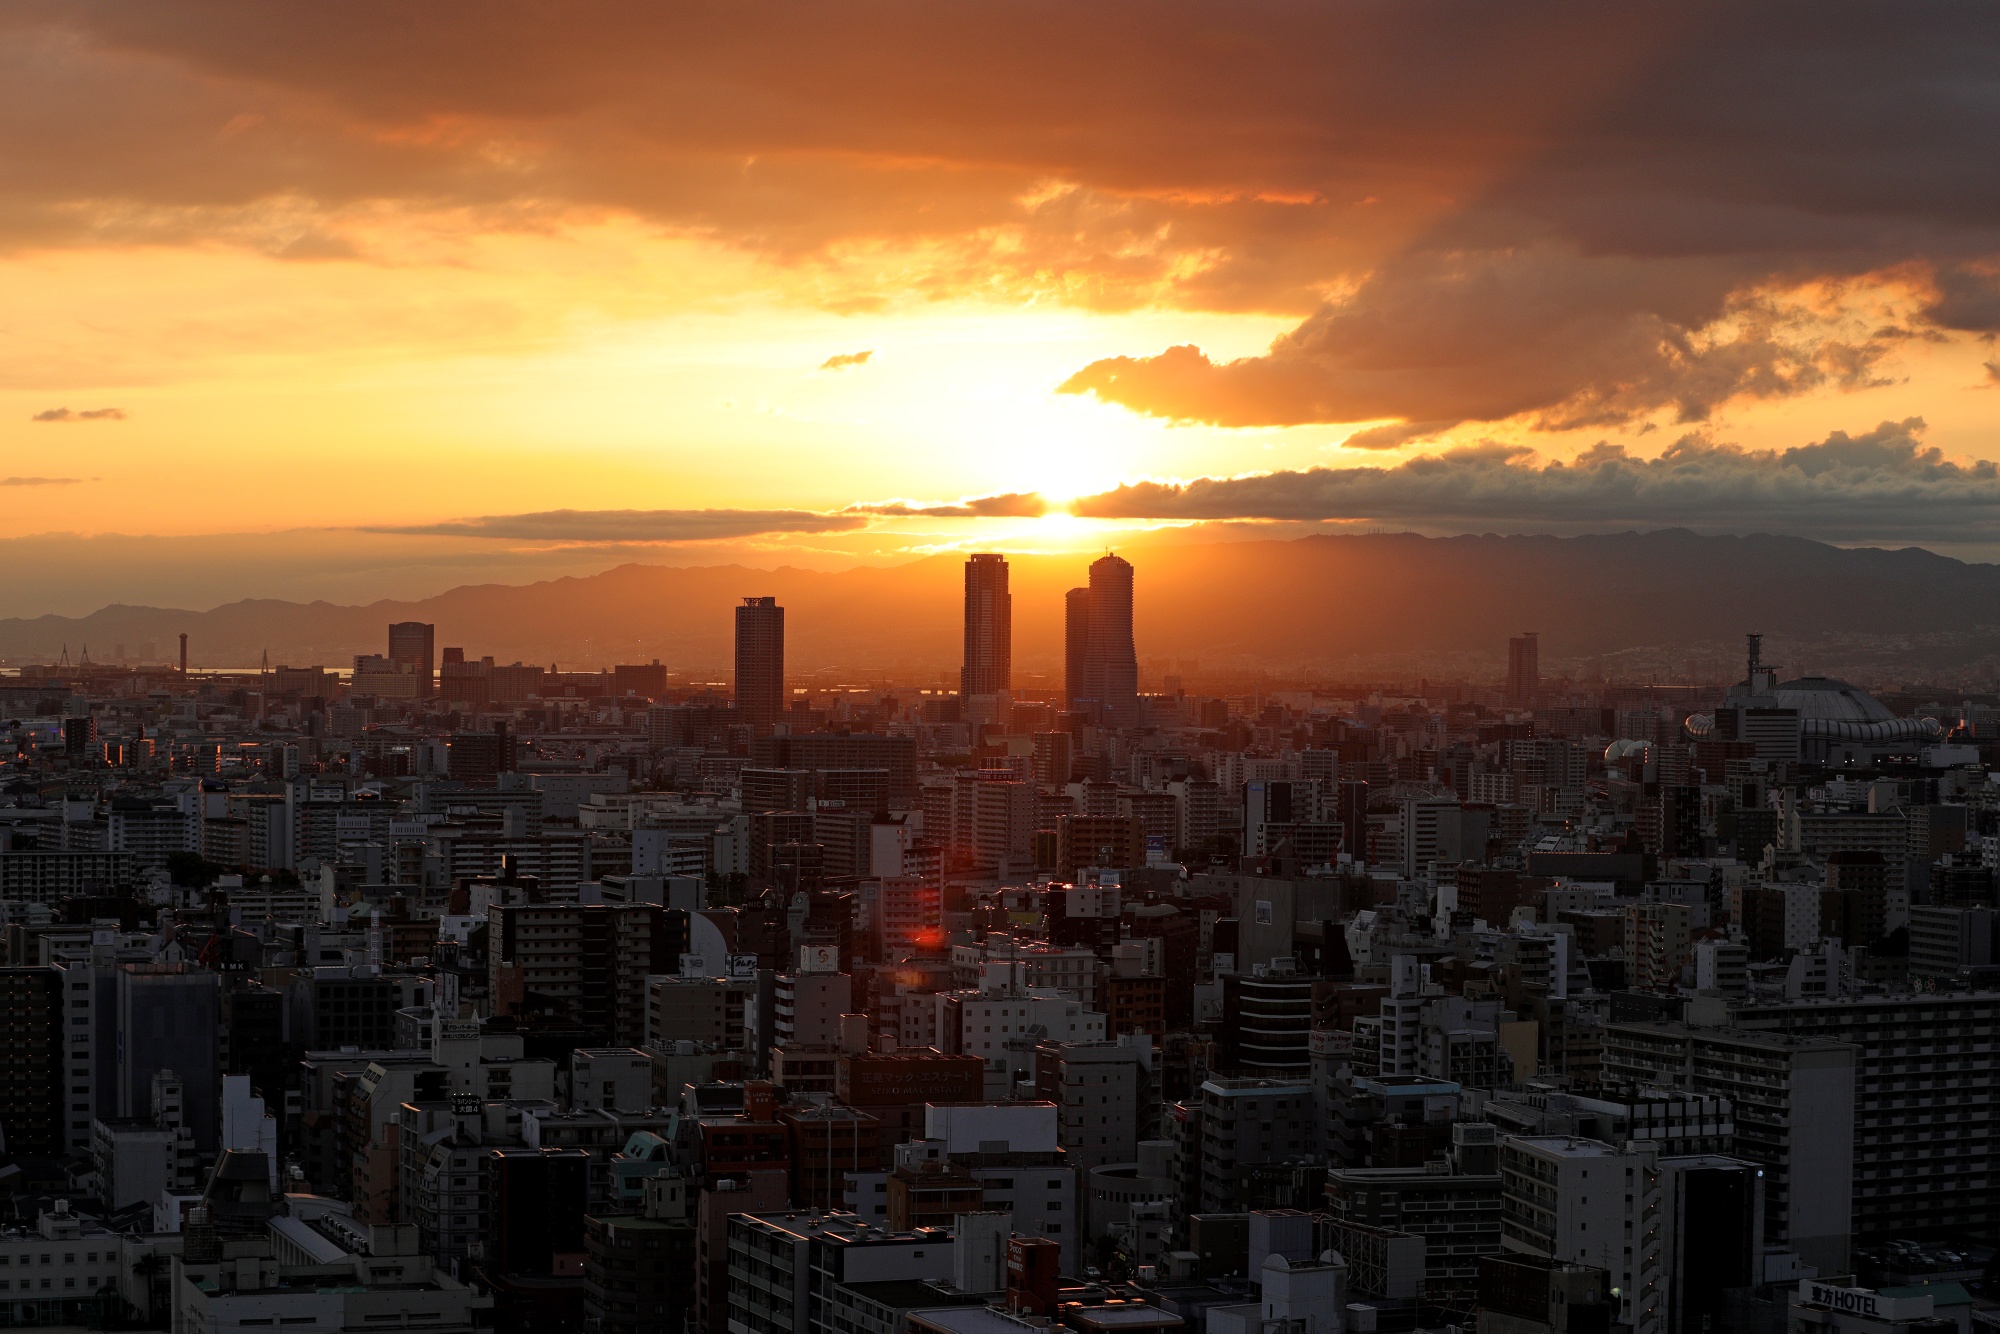 The Osaka skyline.